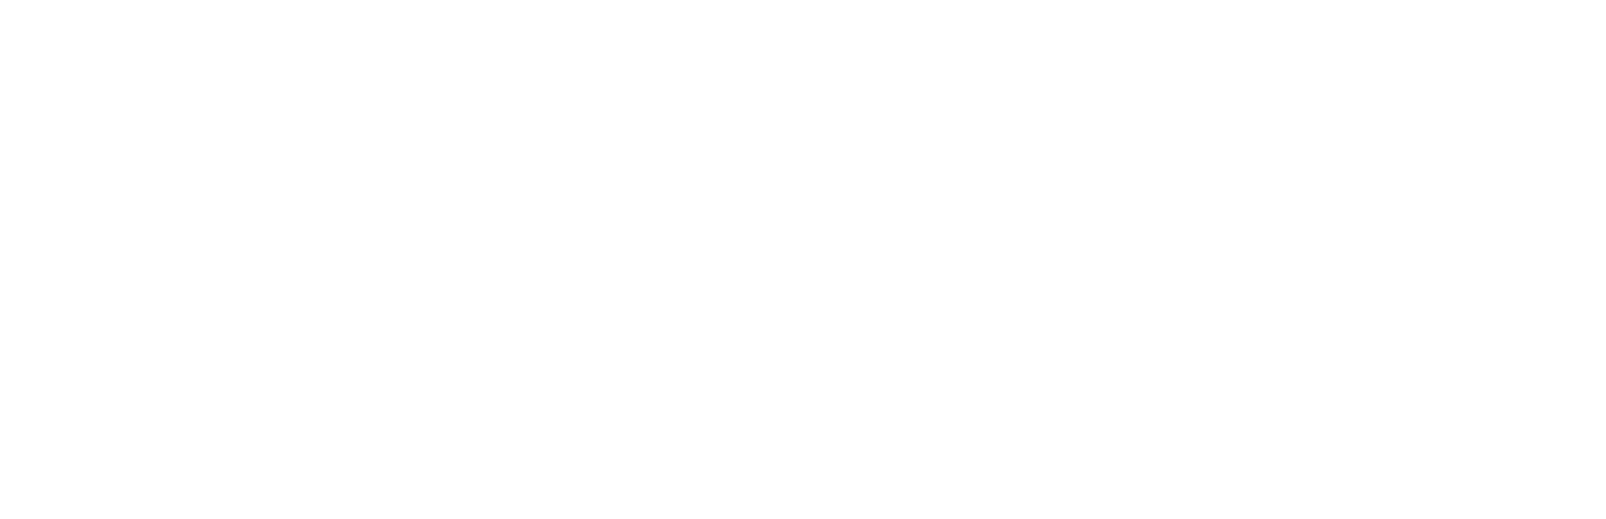 zebra logo for your business, vector illustration Stock Vector Image & Art  - Alamy